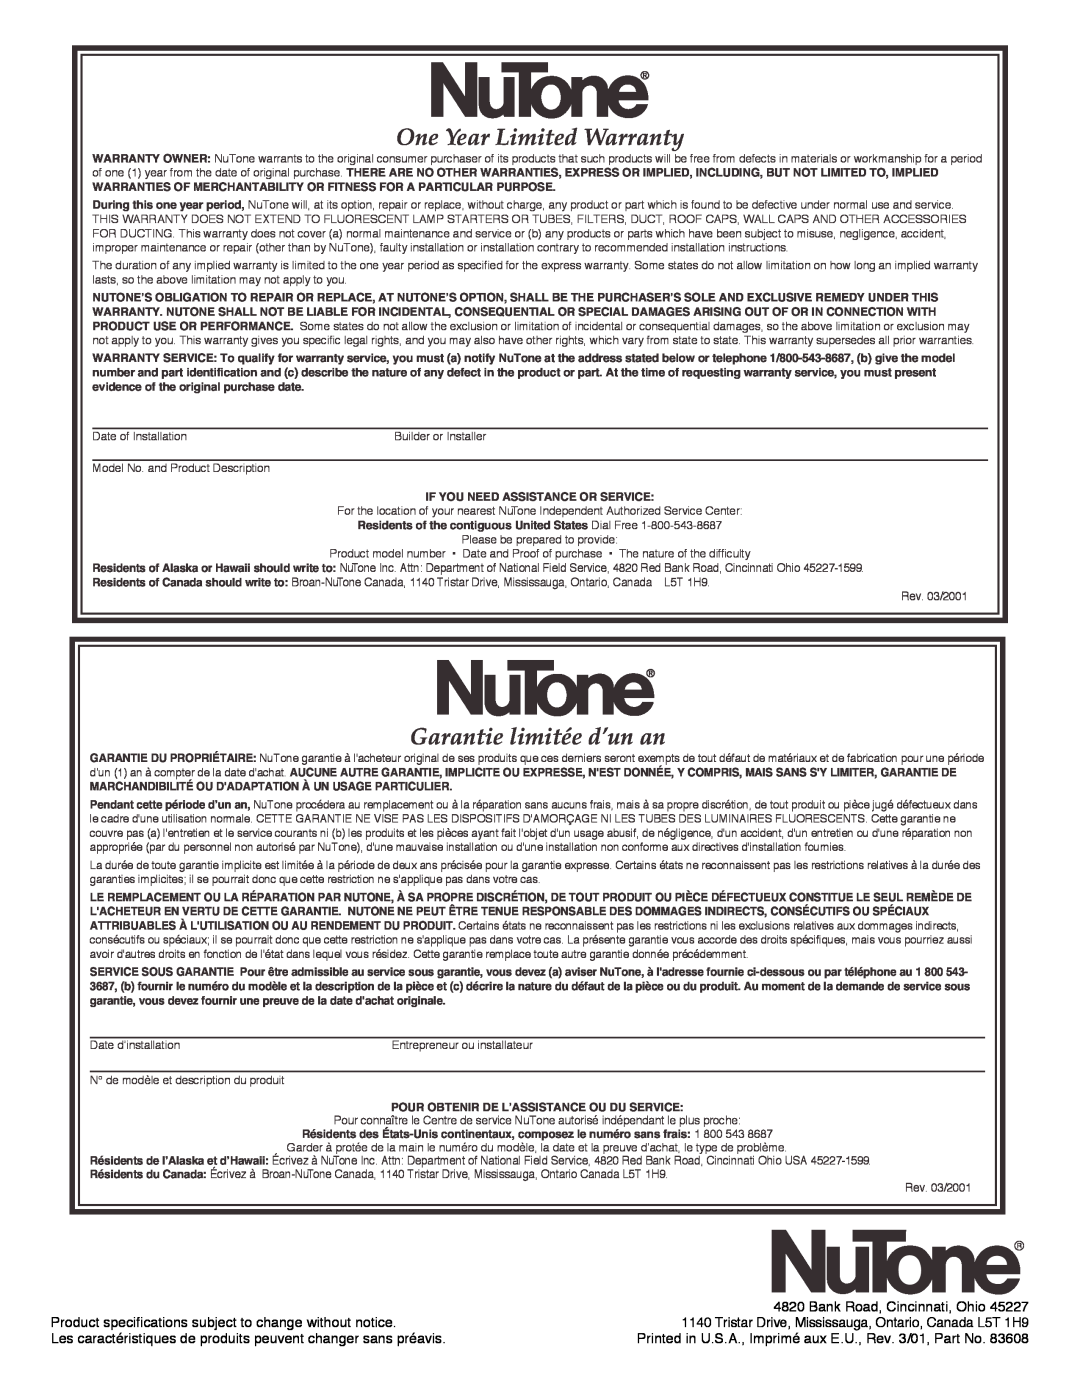 NuTone 838 installation instructions One Year Limited Warranty, Garantie limitée d’un an 